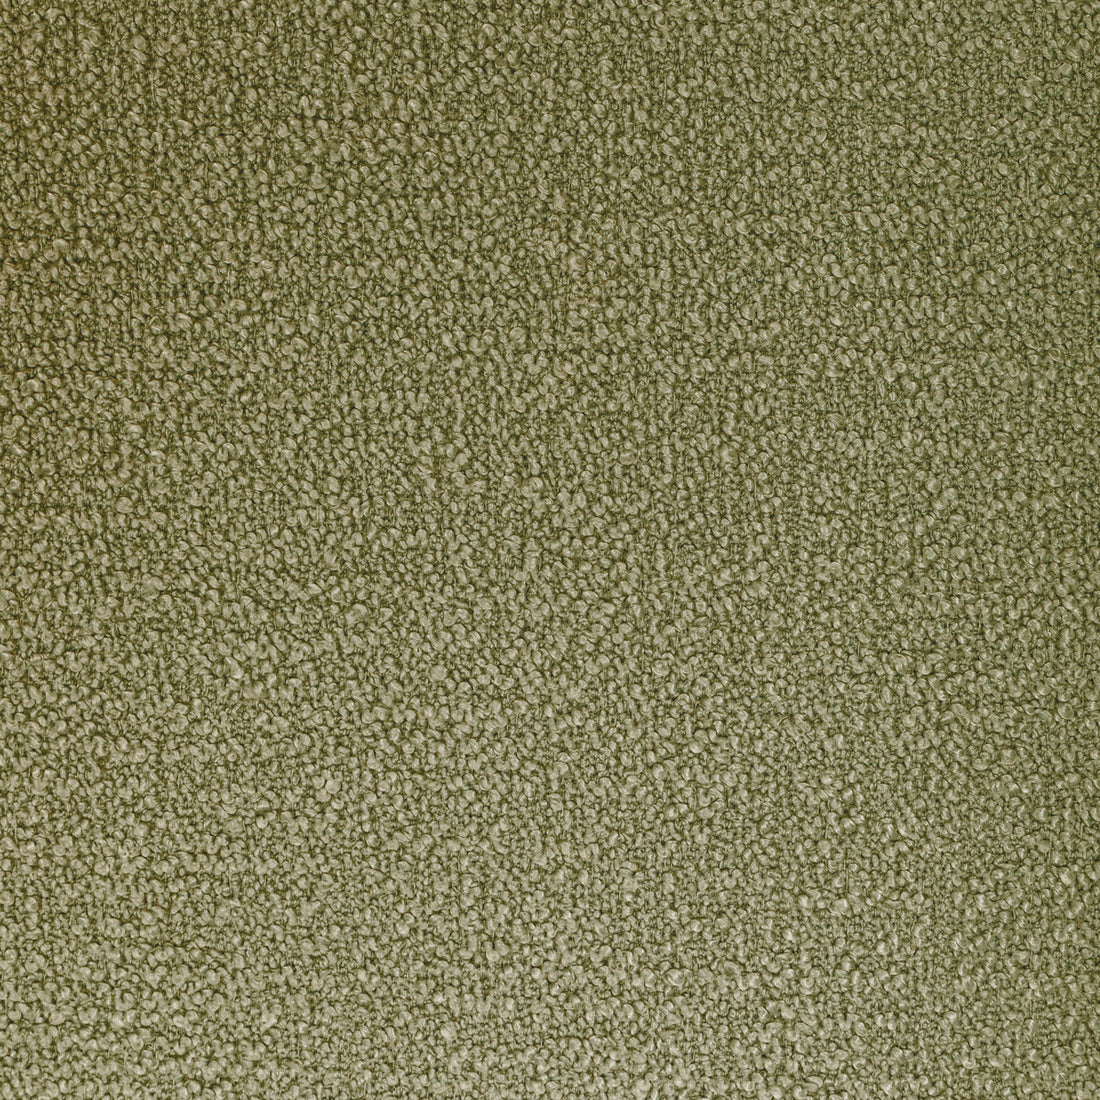 Kravet Smart fabric in 36857-23 color - pattern 36857.23.0 - by Kravet Smart in the Performance Kravetarmor collection